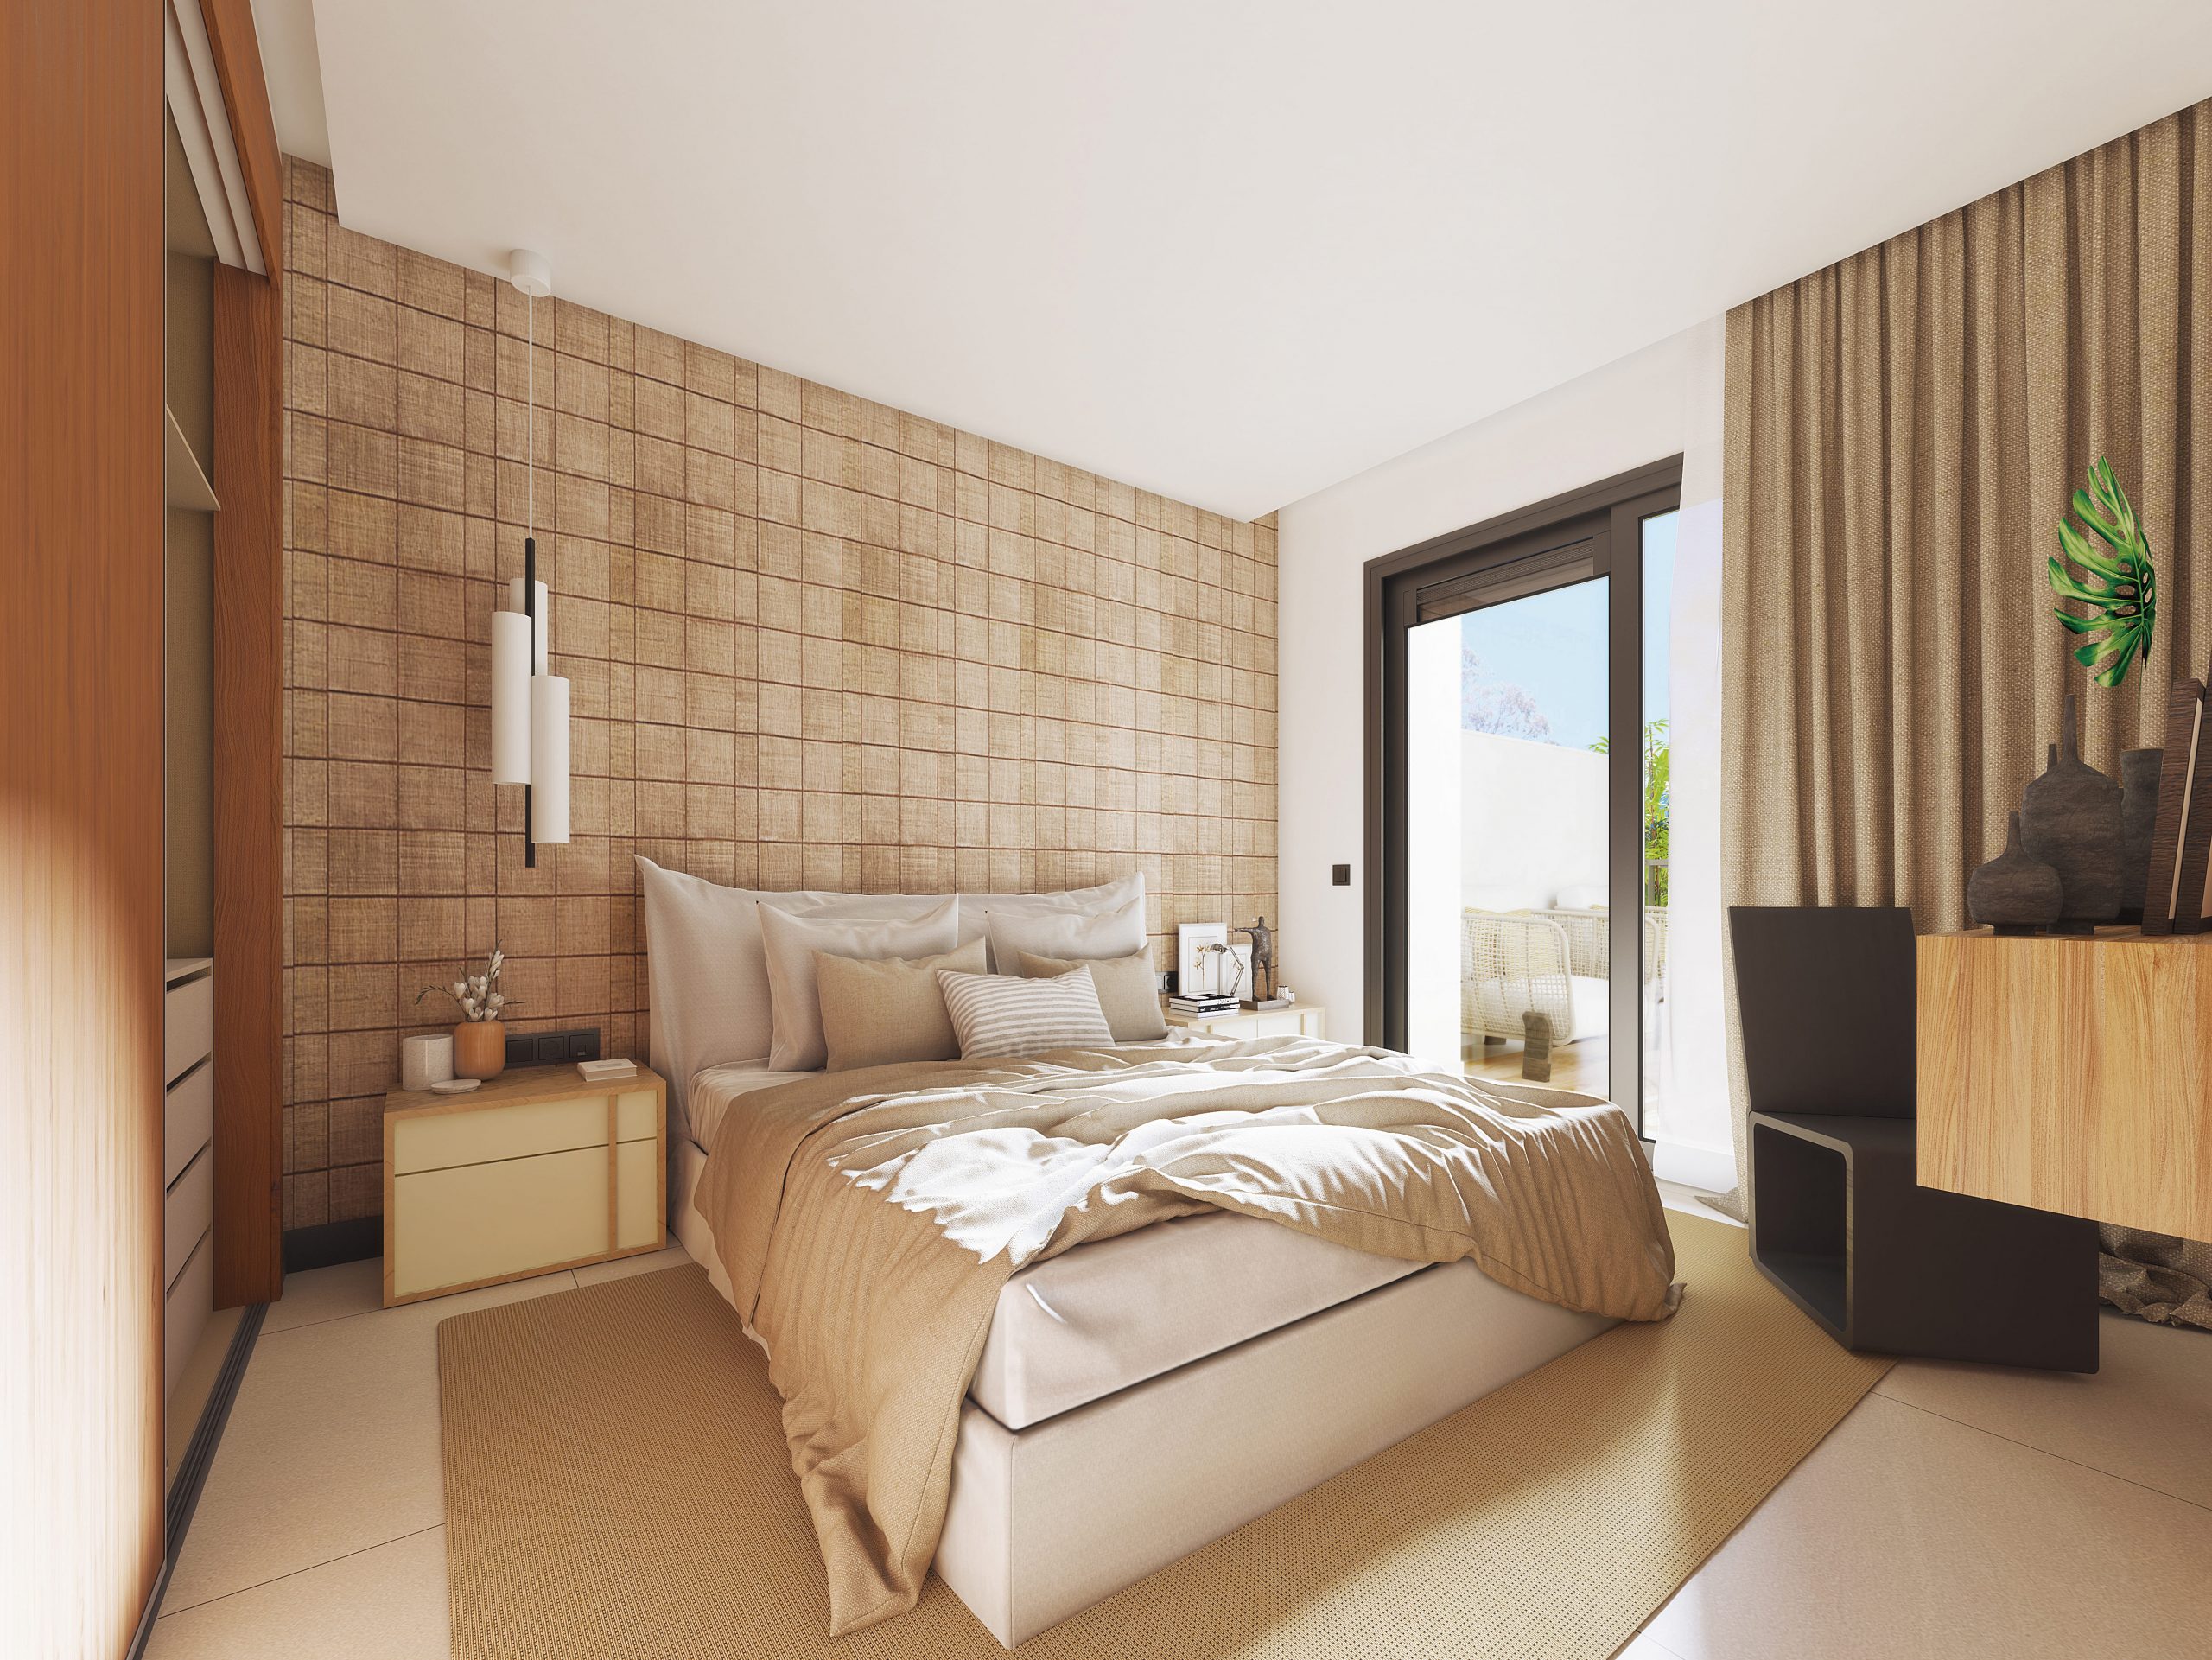 3 bedroom apartment in Marbella